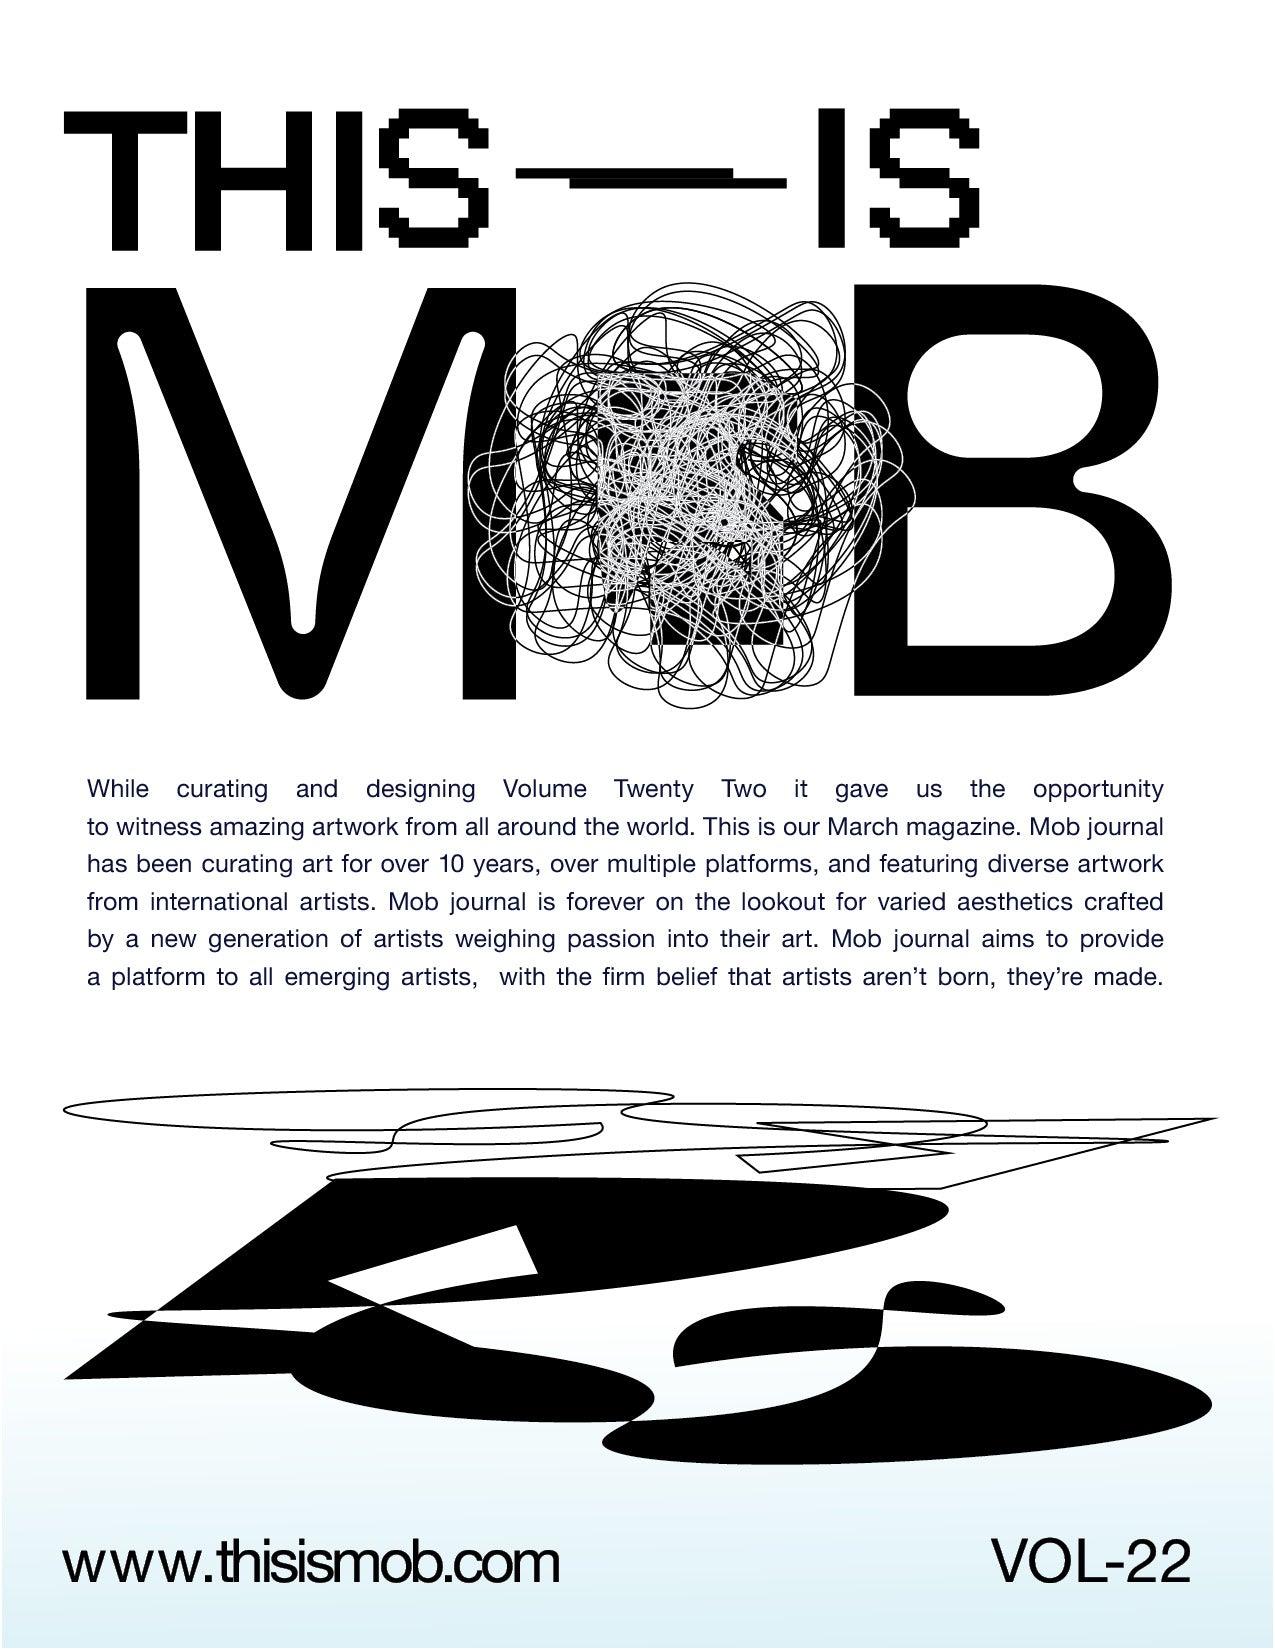 MOB JOURNAL | VOLUME TWENTY TWO | ISSUE #37 - Mob Journal